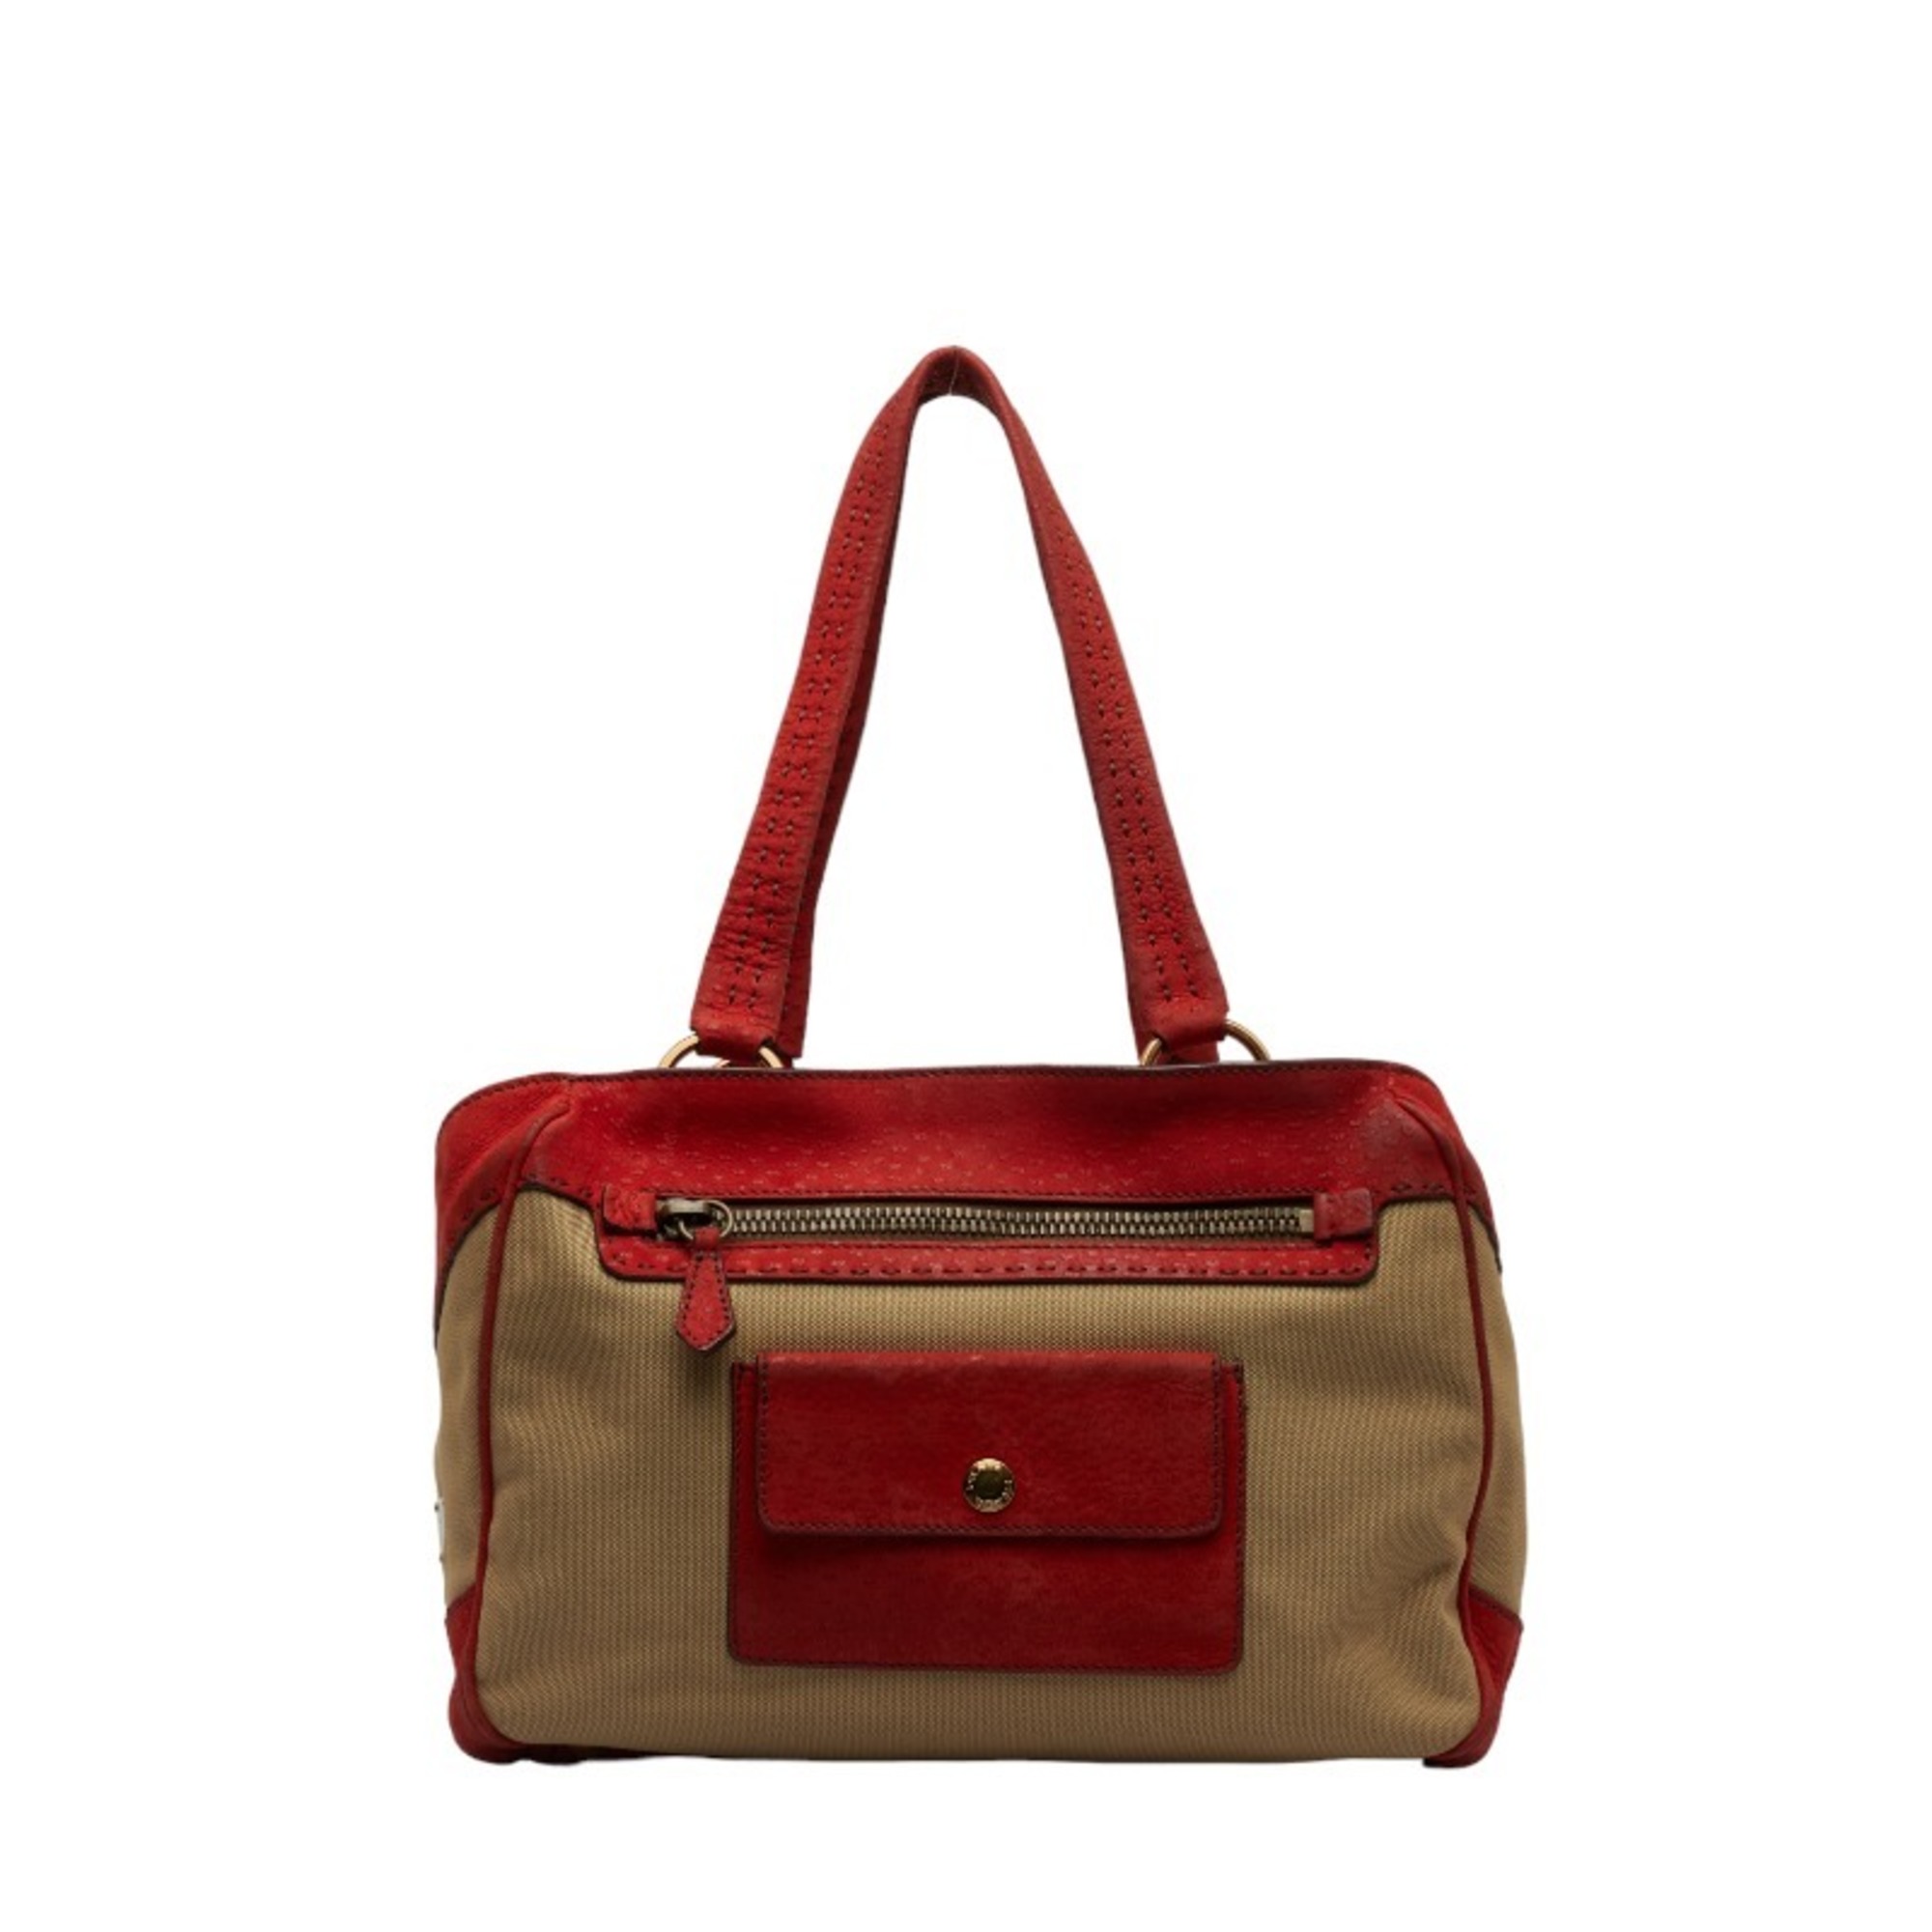 Prada handbag beige red canvas leather women's PRADA